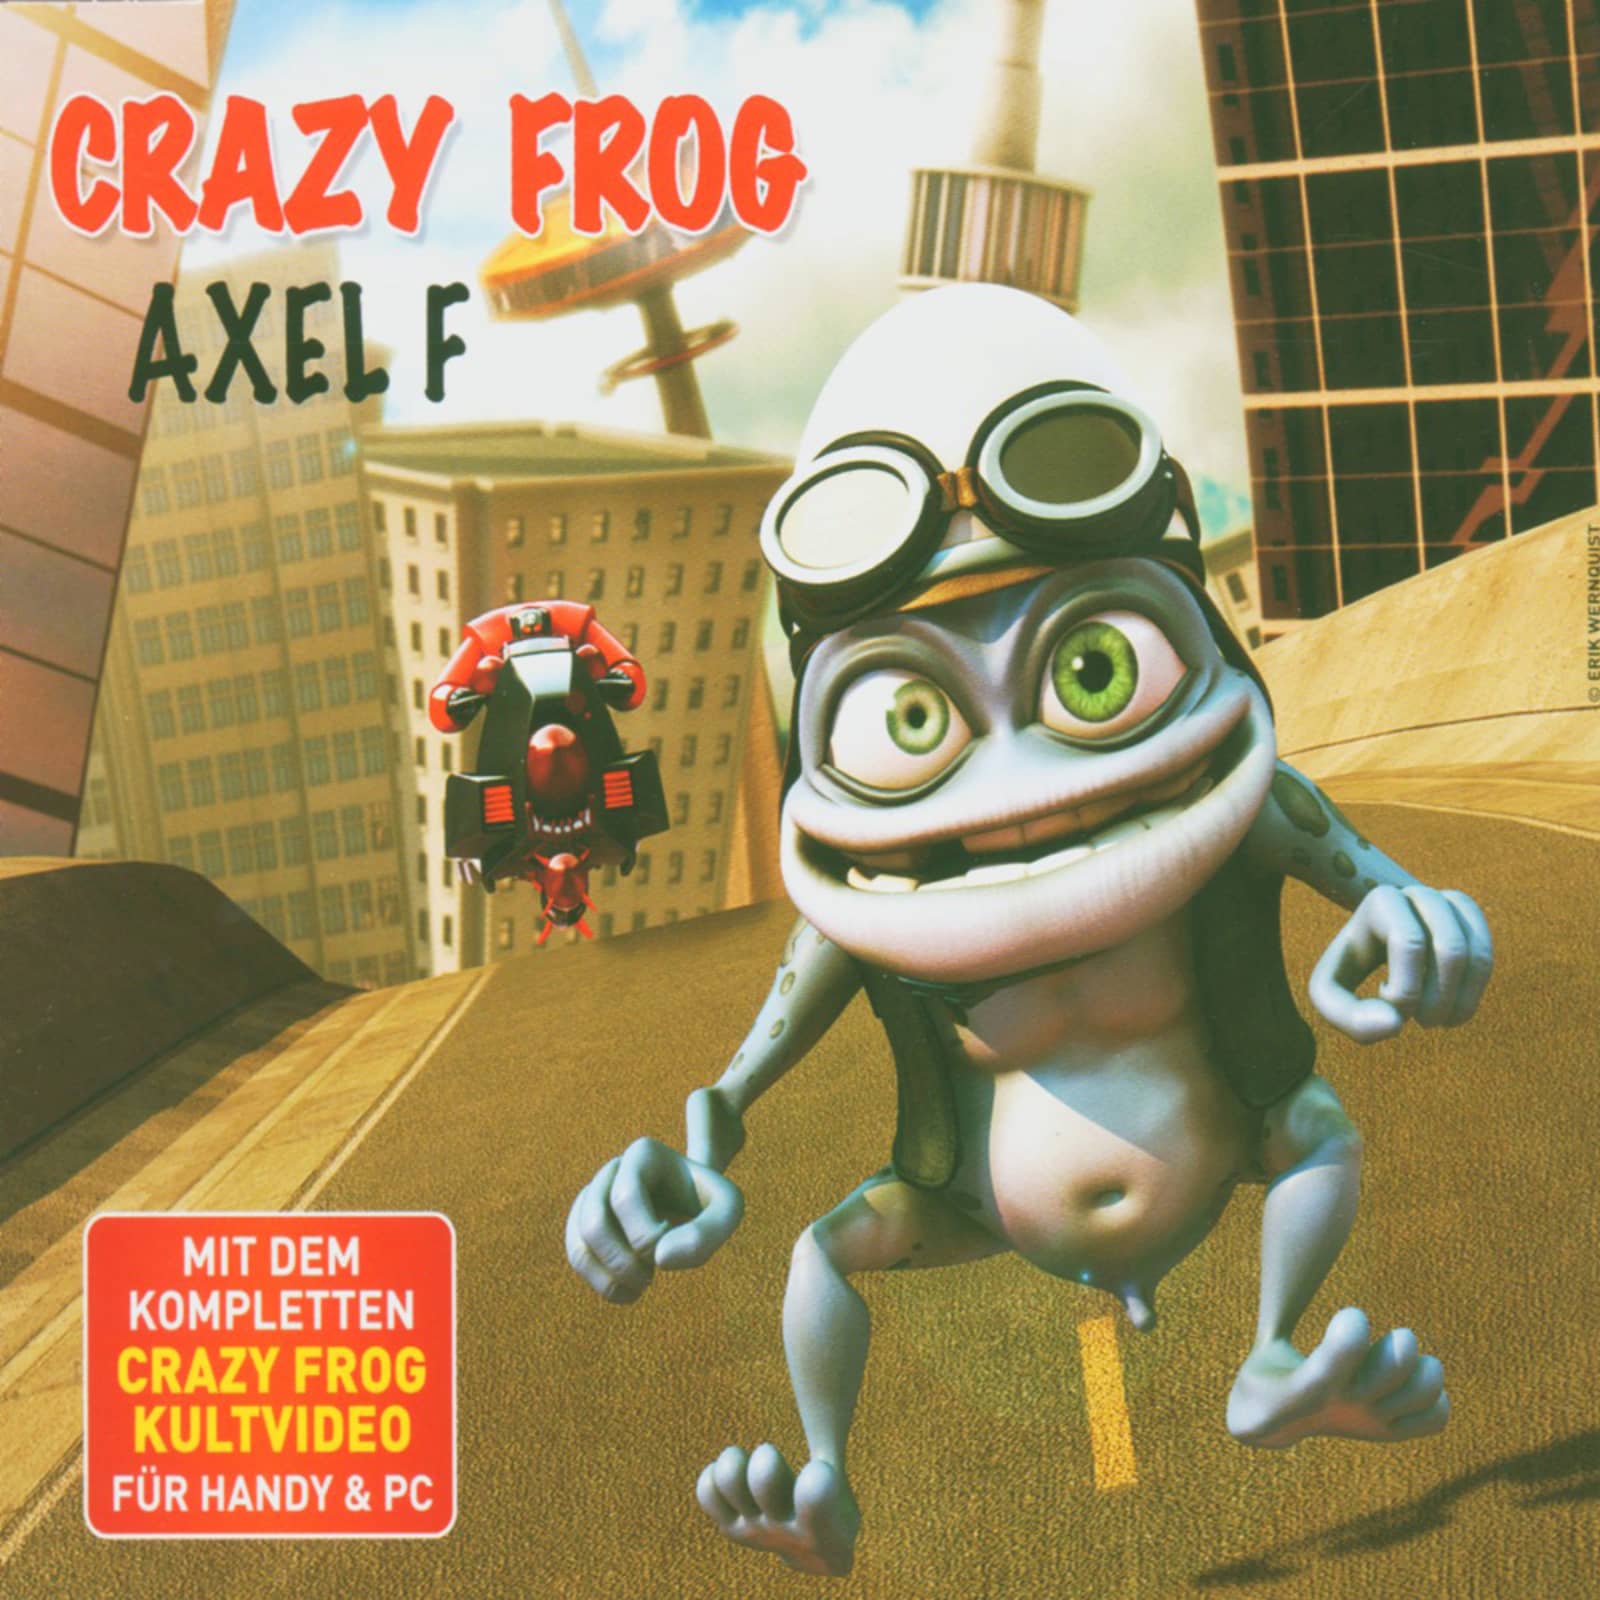 Crazy Frog Axel f 2004